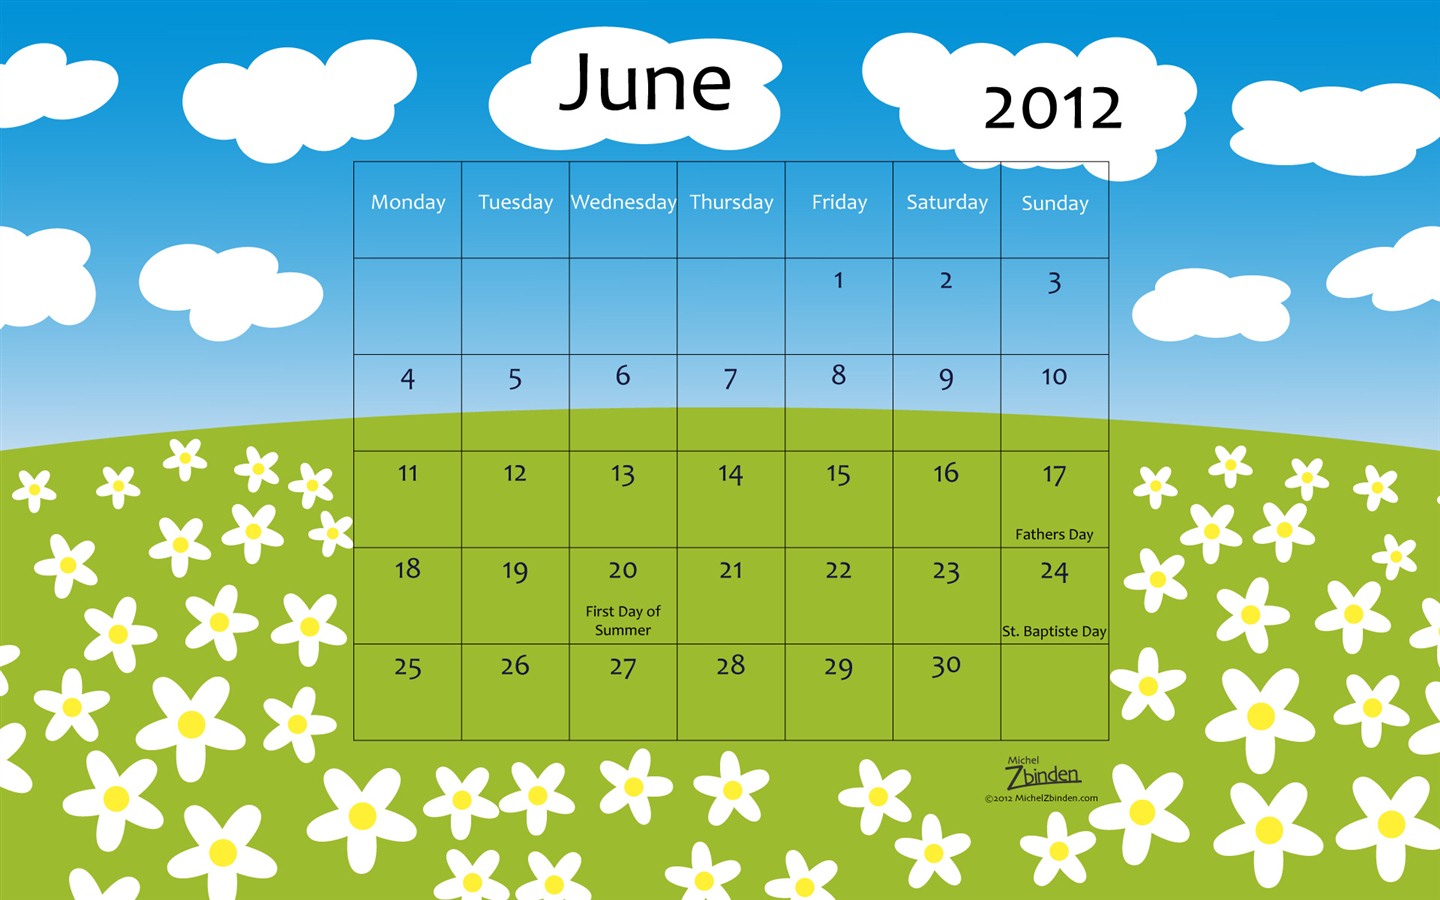 June 2012 Calendar wallpapers (1) #2 - 1440x900